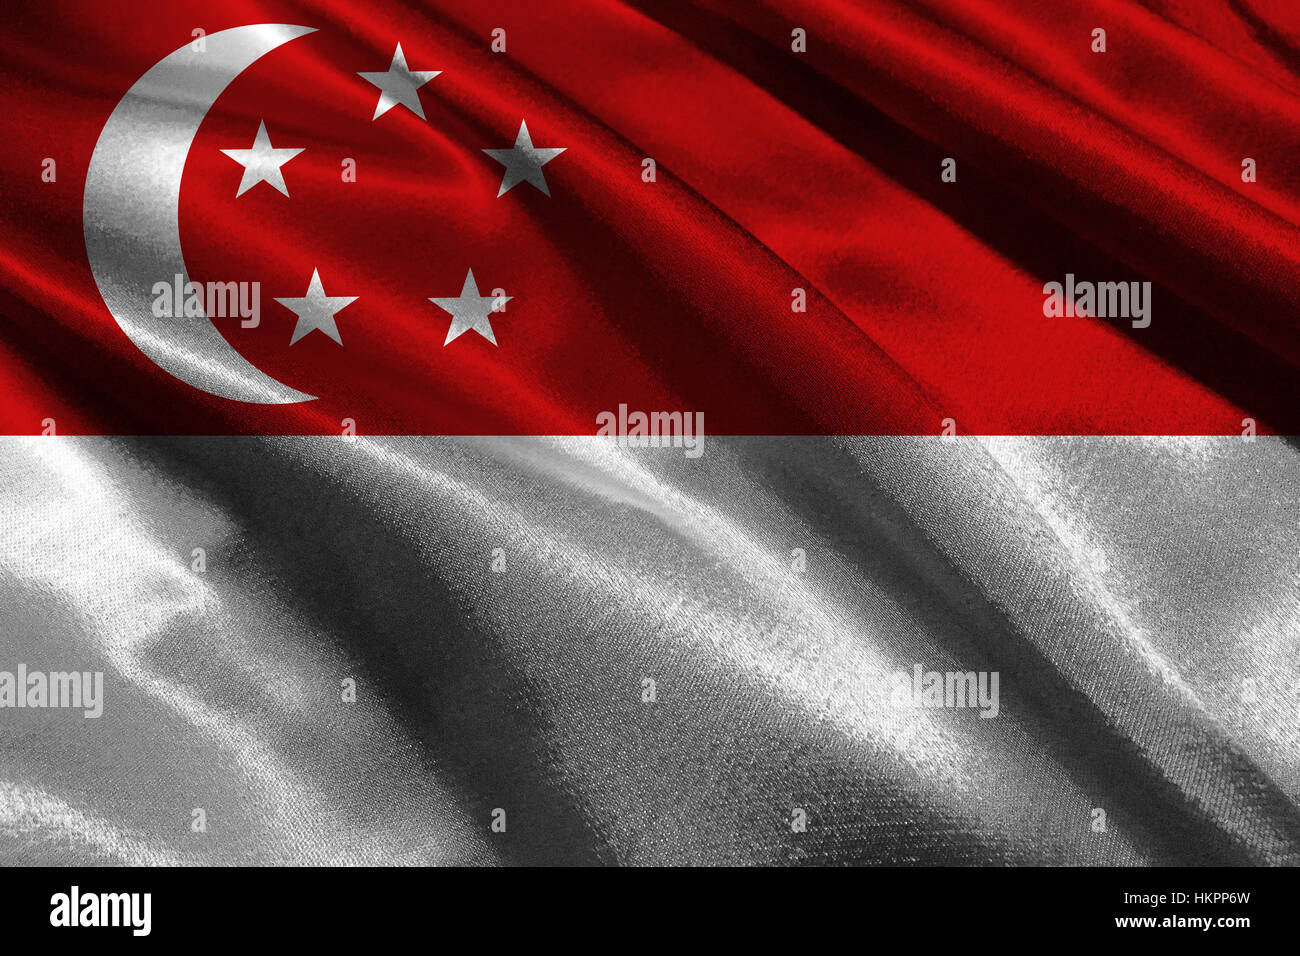 Singapore flag ,3D Singapore national flag 3D illustration symbol Stock Photo